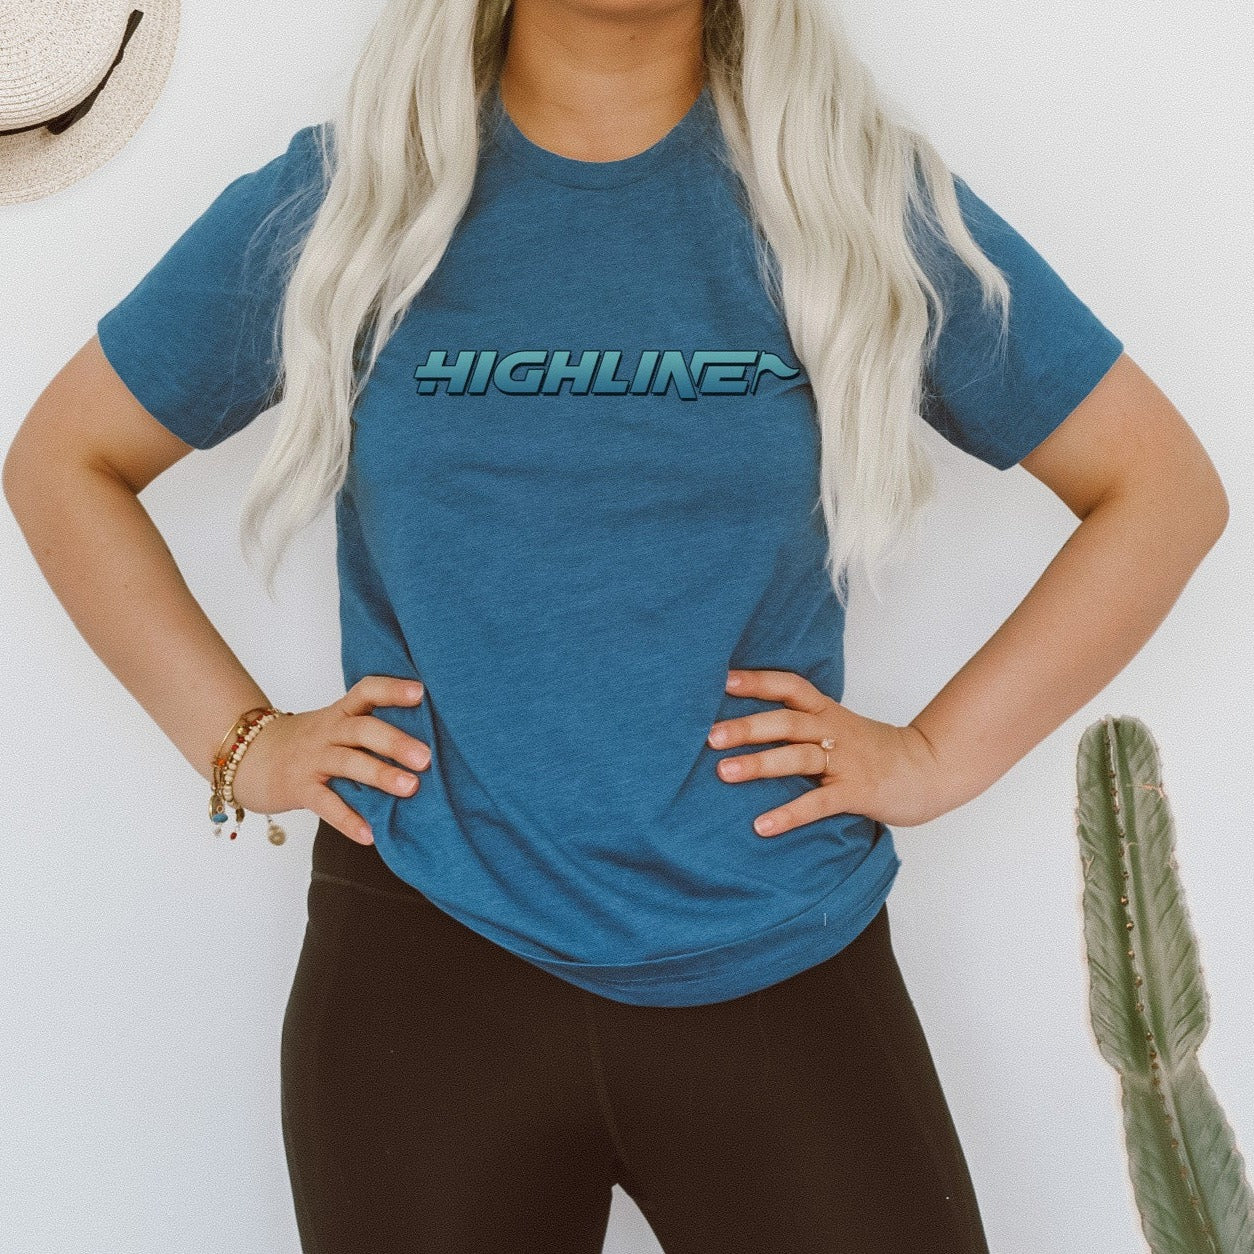 Highline-Clothing-Teal-Brand-Shirt